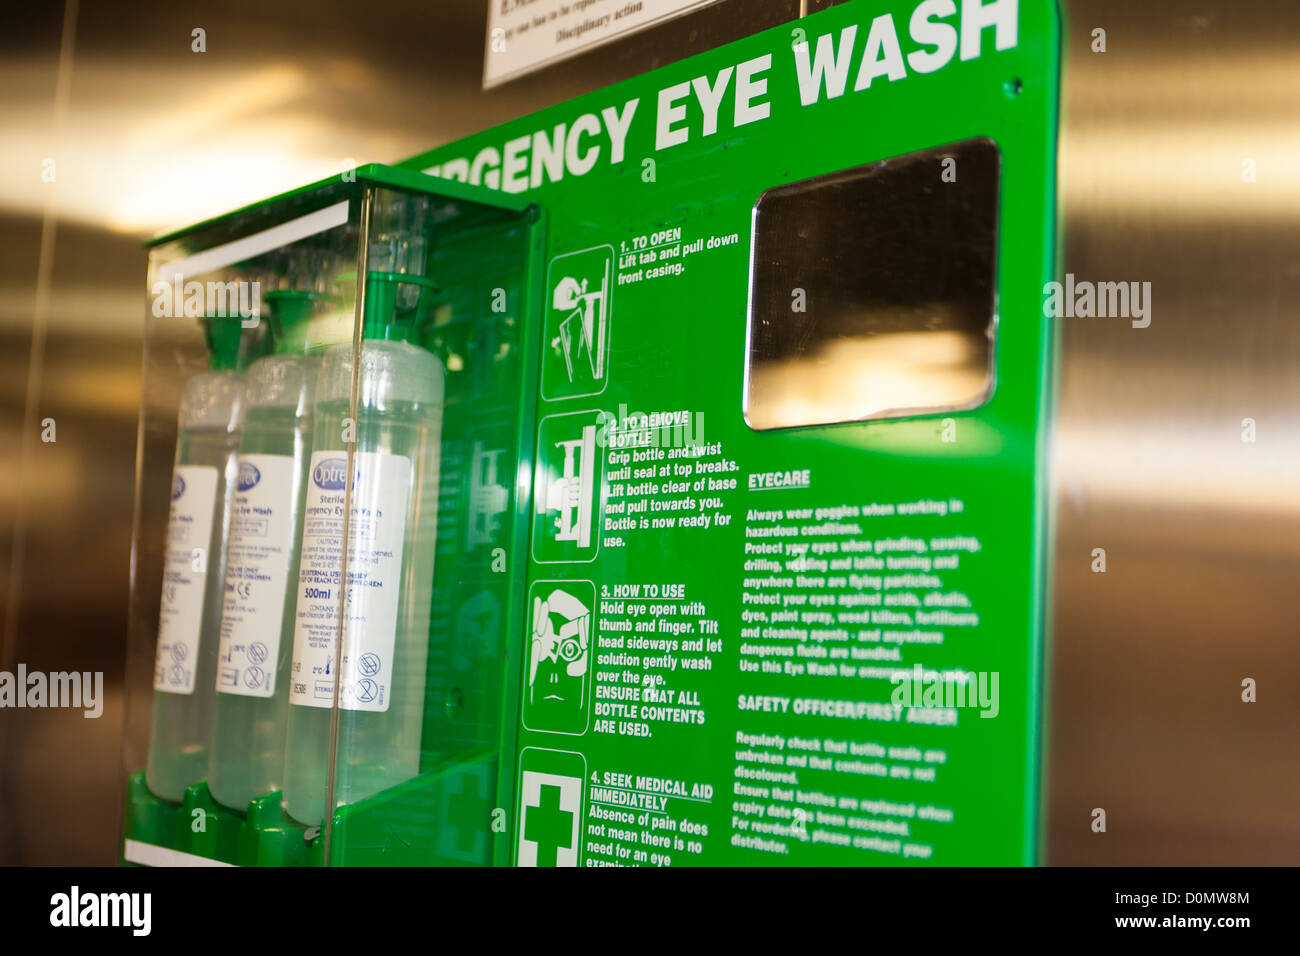 Emergency eye wash medical kit in Kitchens Stock Photo